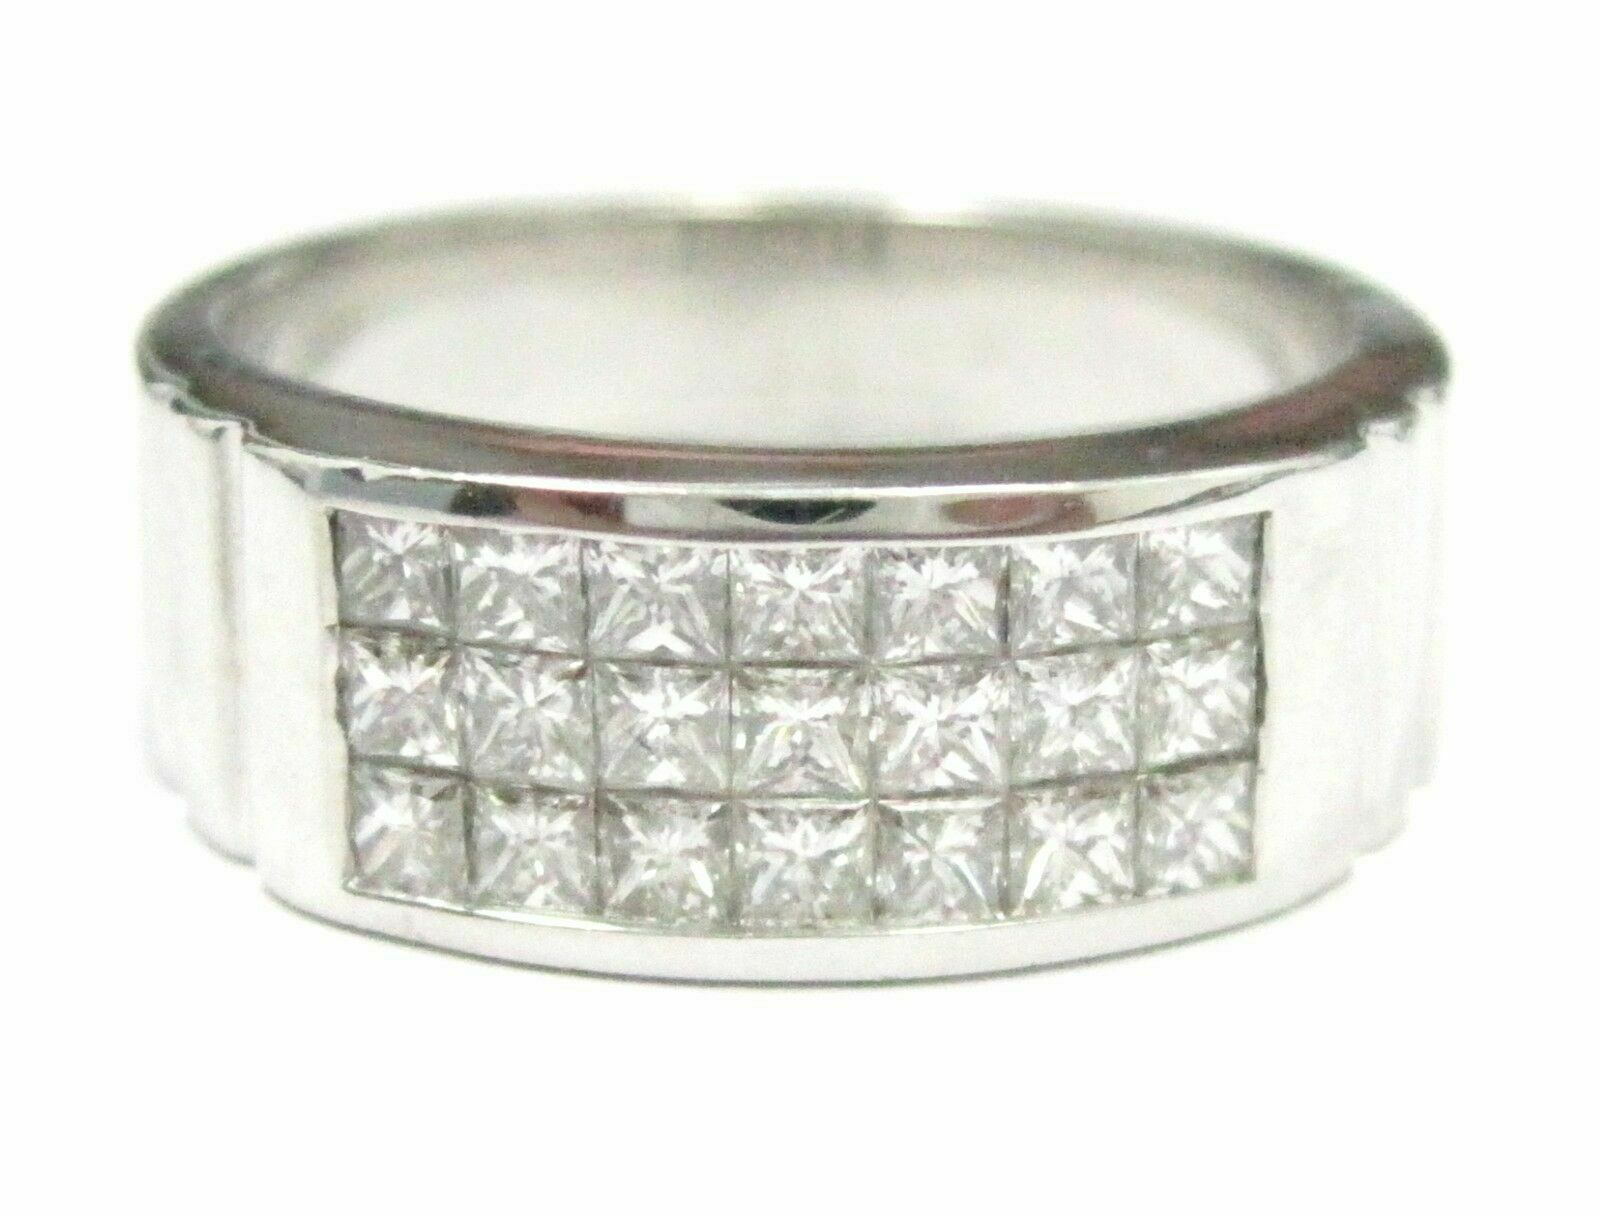 1.35 TCW Men's 3 Row Princess Cut Diamond Ring/Band Size 10 14kt White Gold